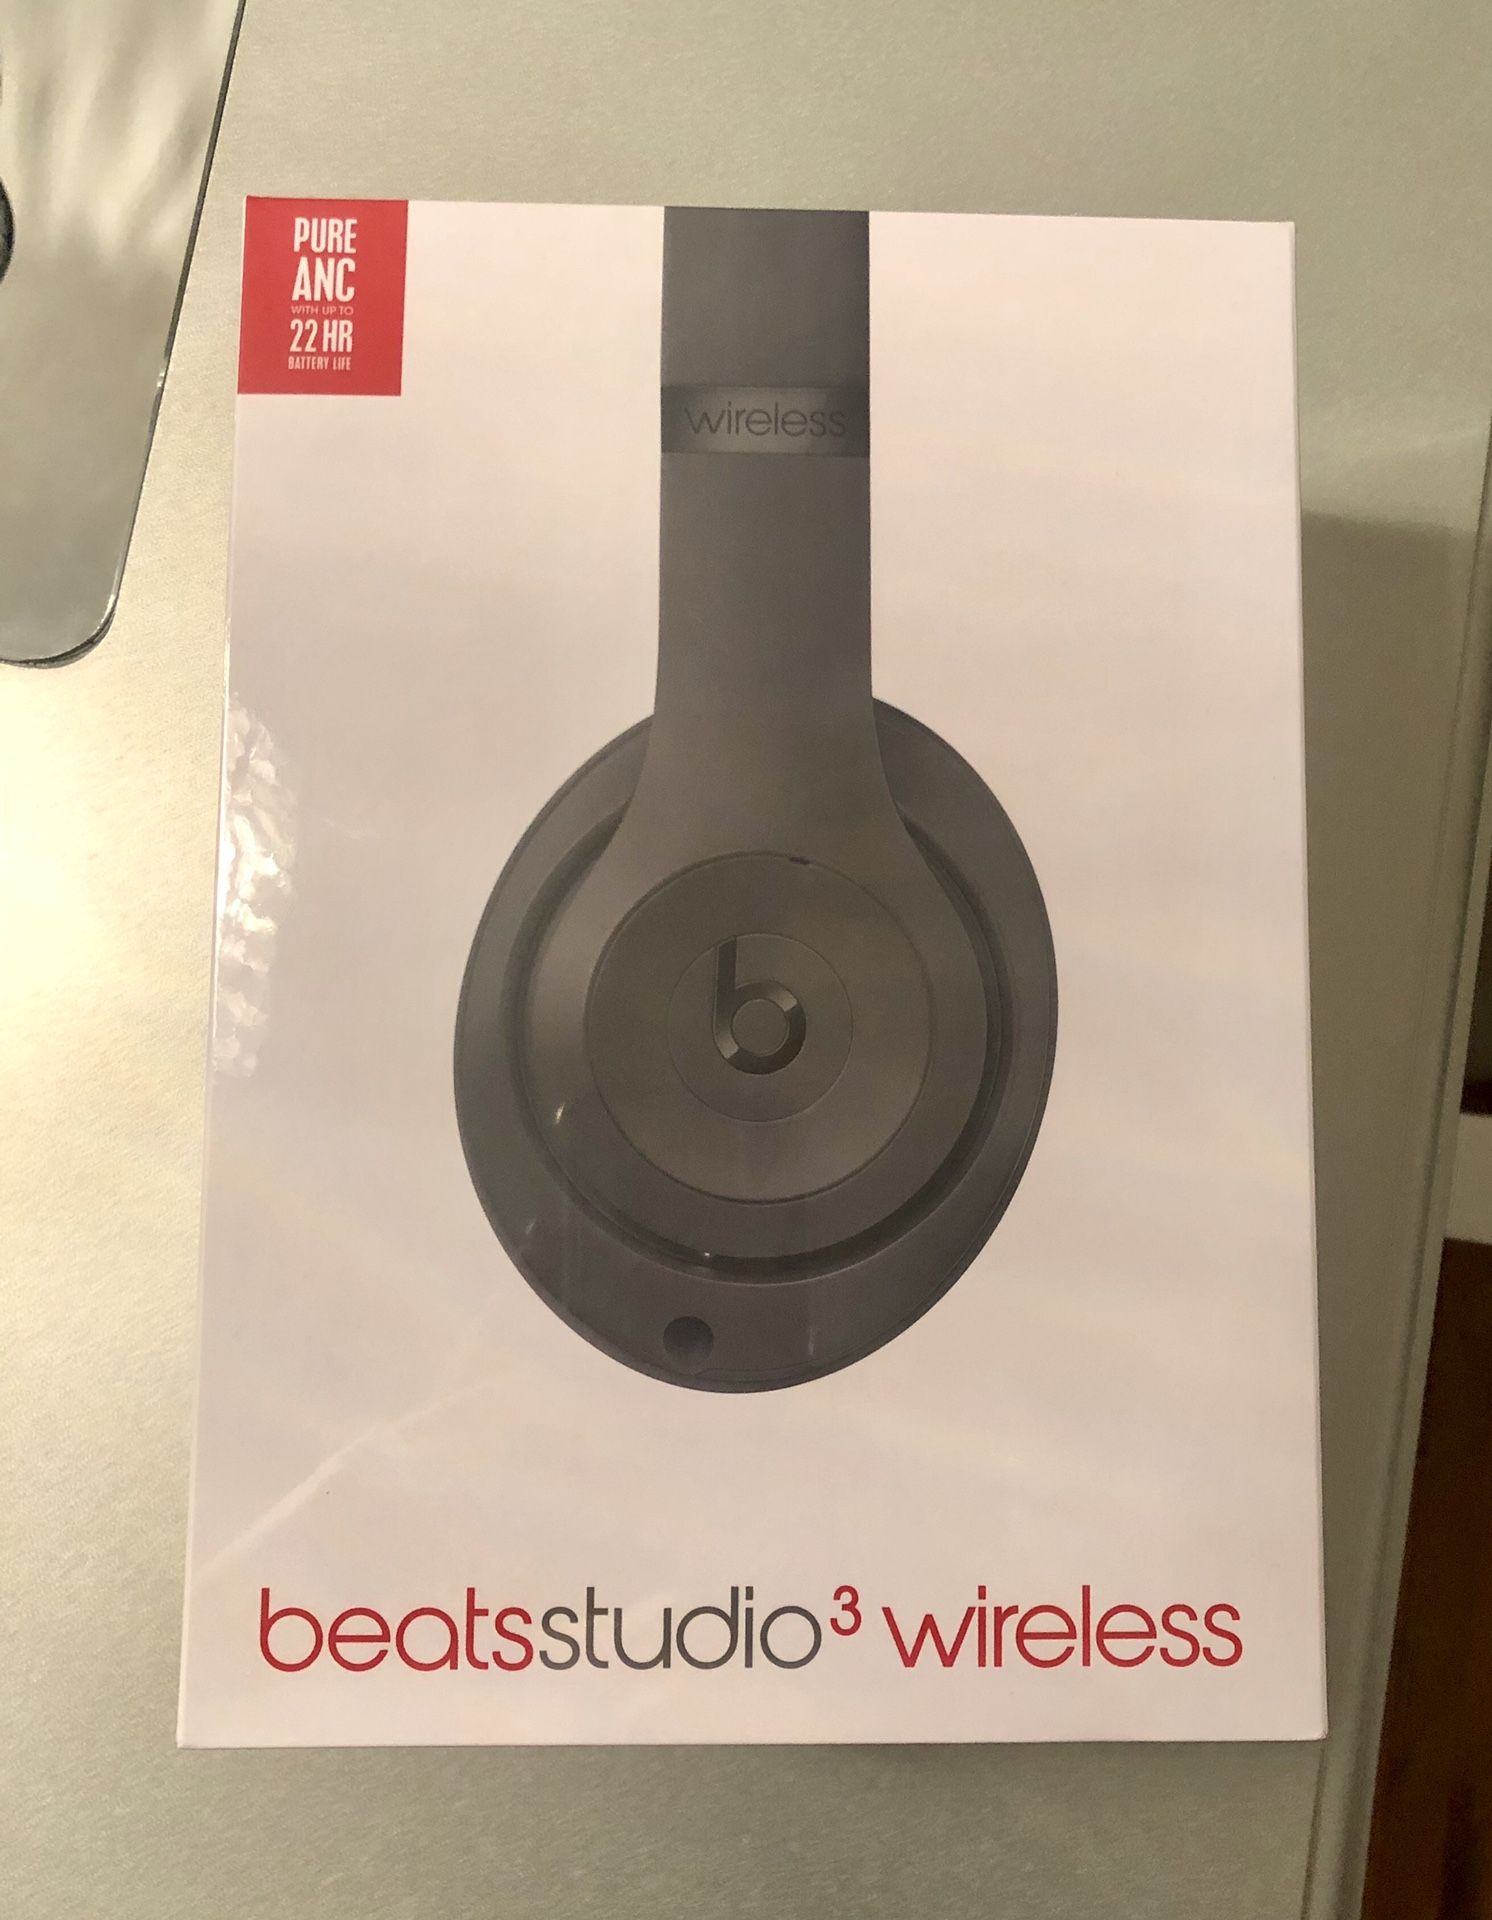 Beats studio 3 wireless new in box